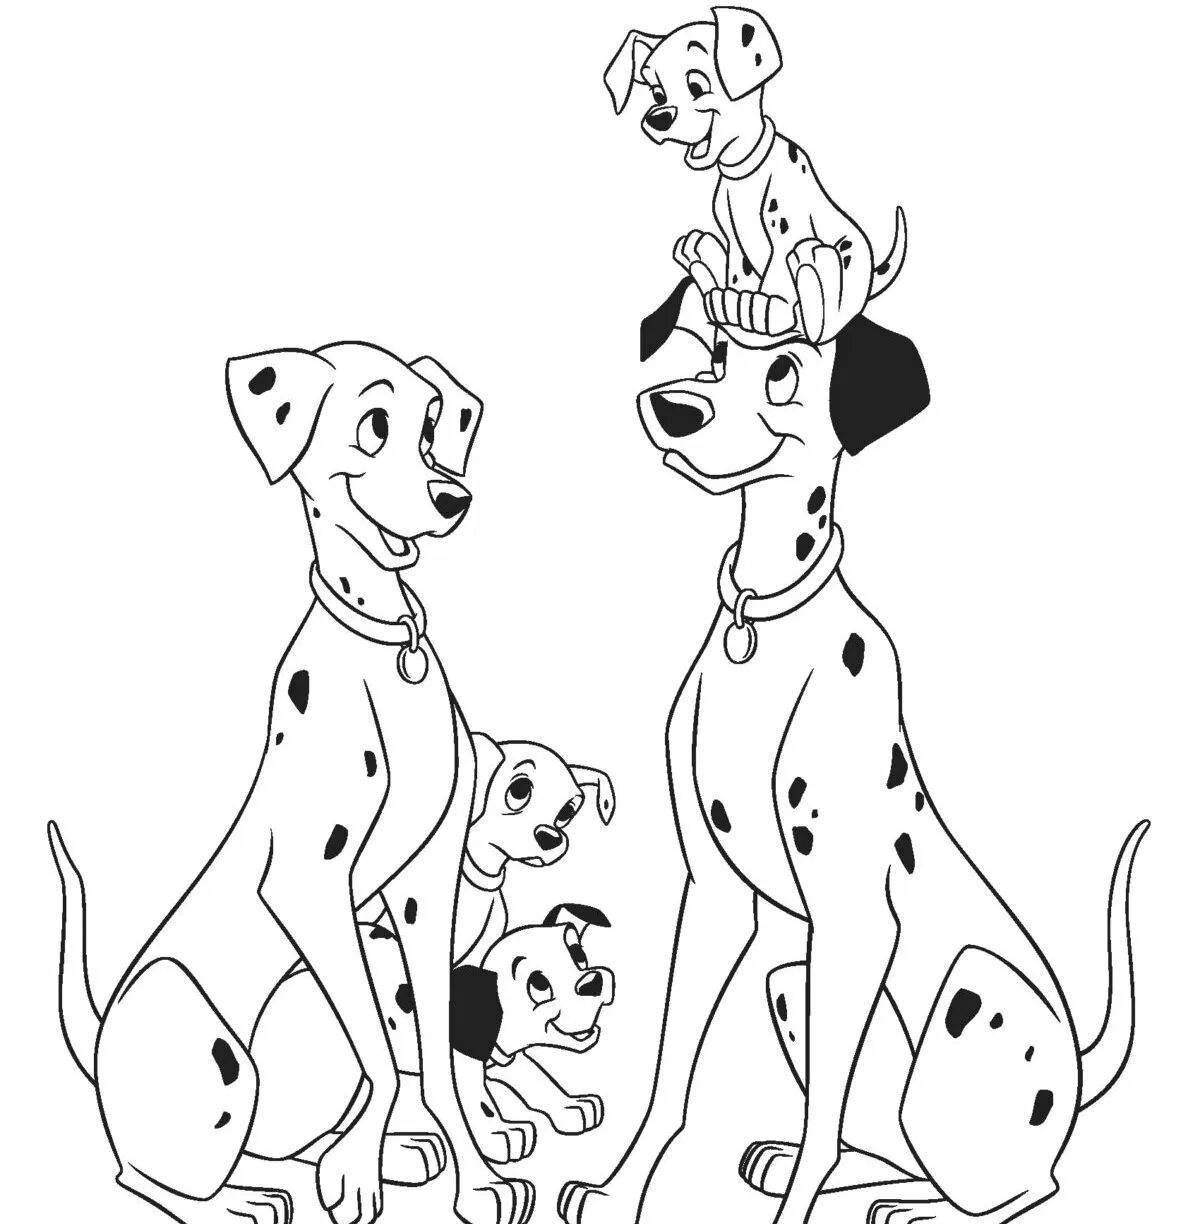 Забавная раскраска собачьего семейства